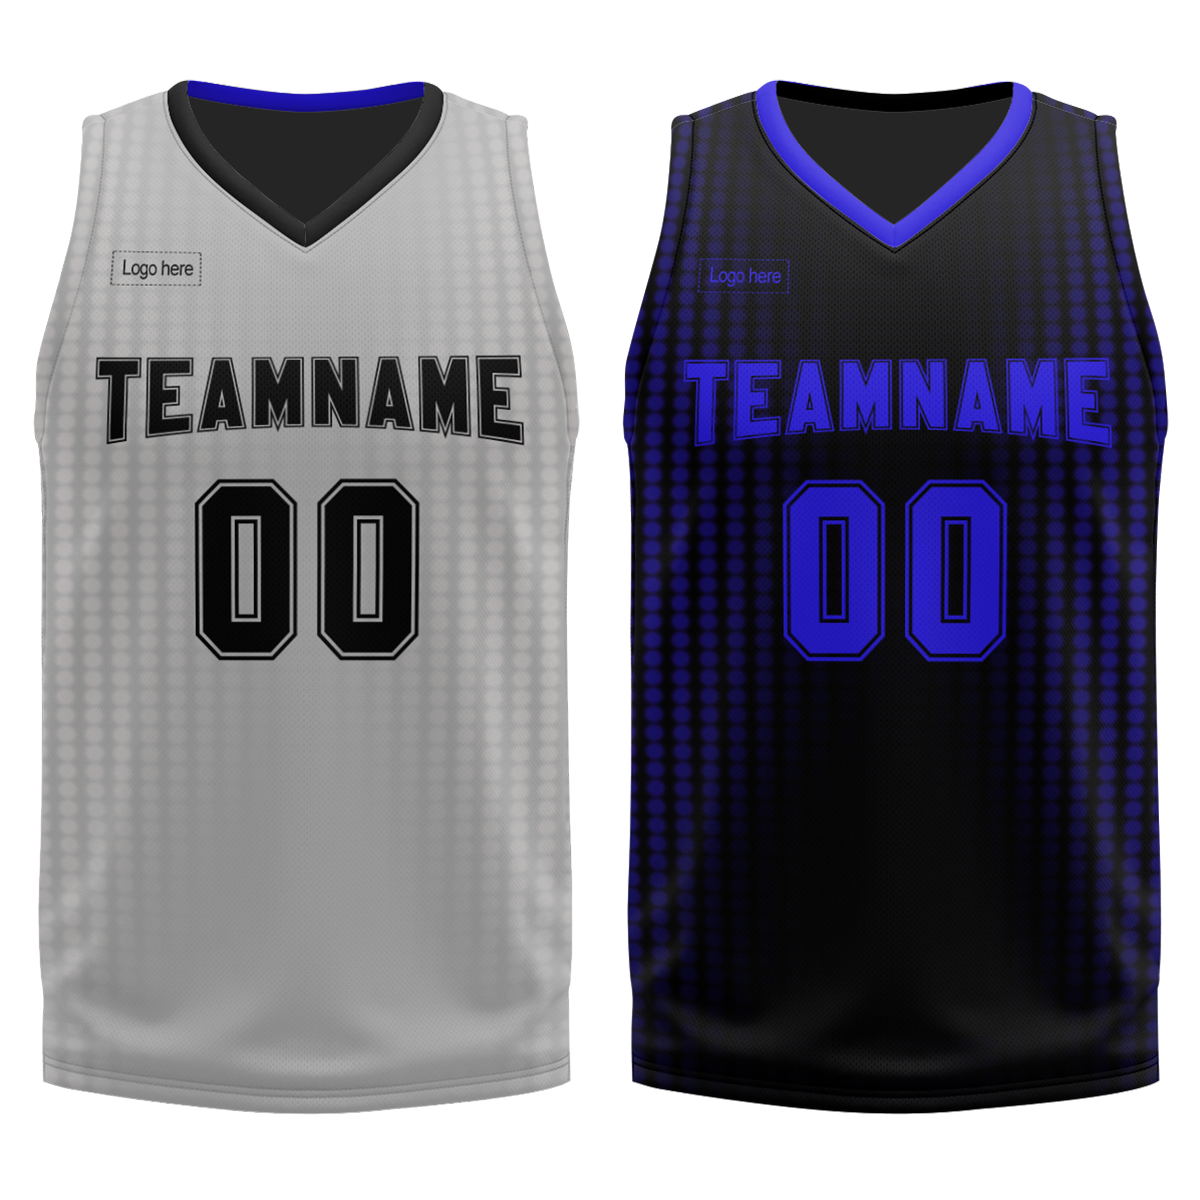 promotion-sales-large-size-sportswear-uniforms-new-design-customized-print-logo-reversible-basketball-jerseys-at-cj-pod-4